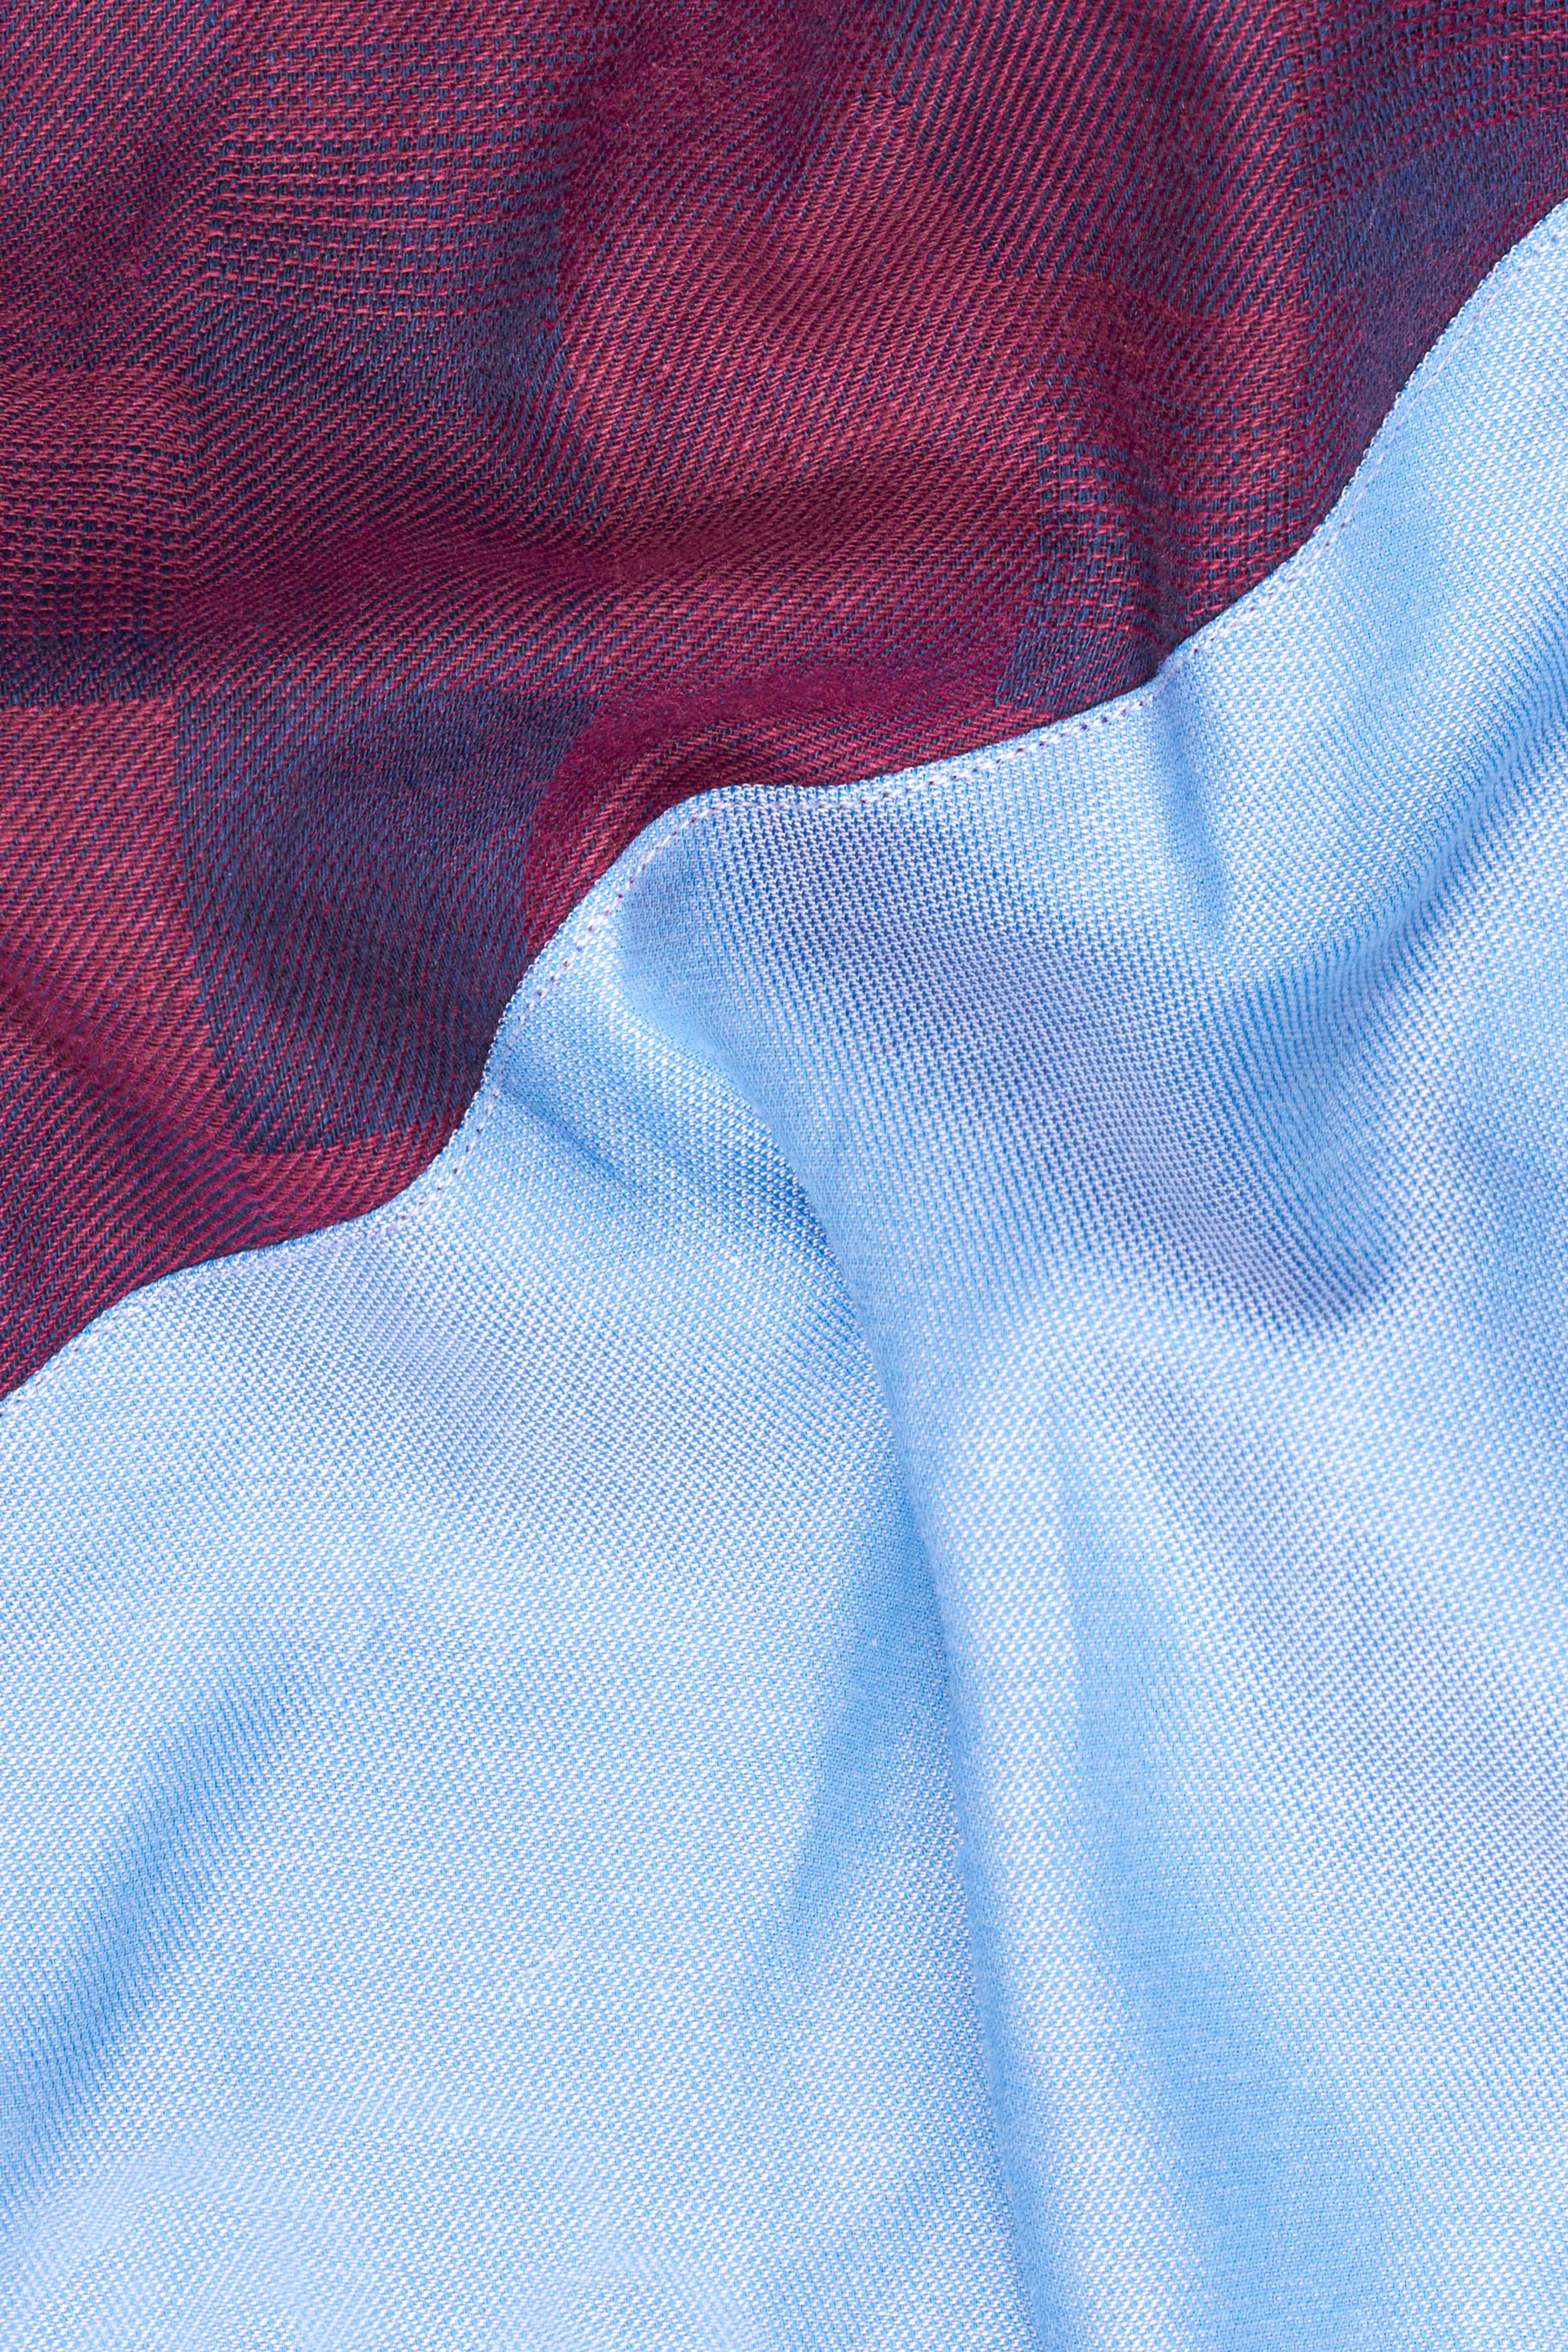 Casper Blue And Eclipse Wine Lion Embroidered Jacquard Textured Premium Cotton Designer Shirt